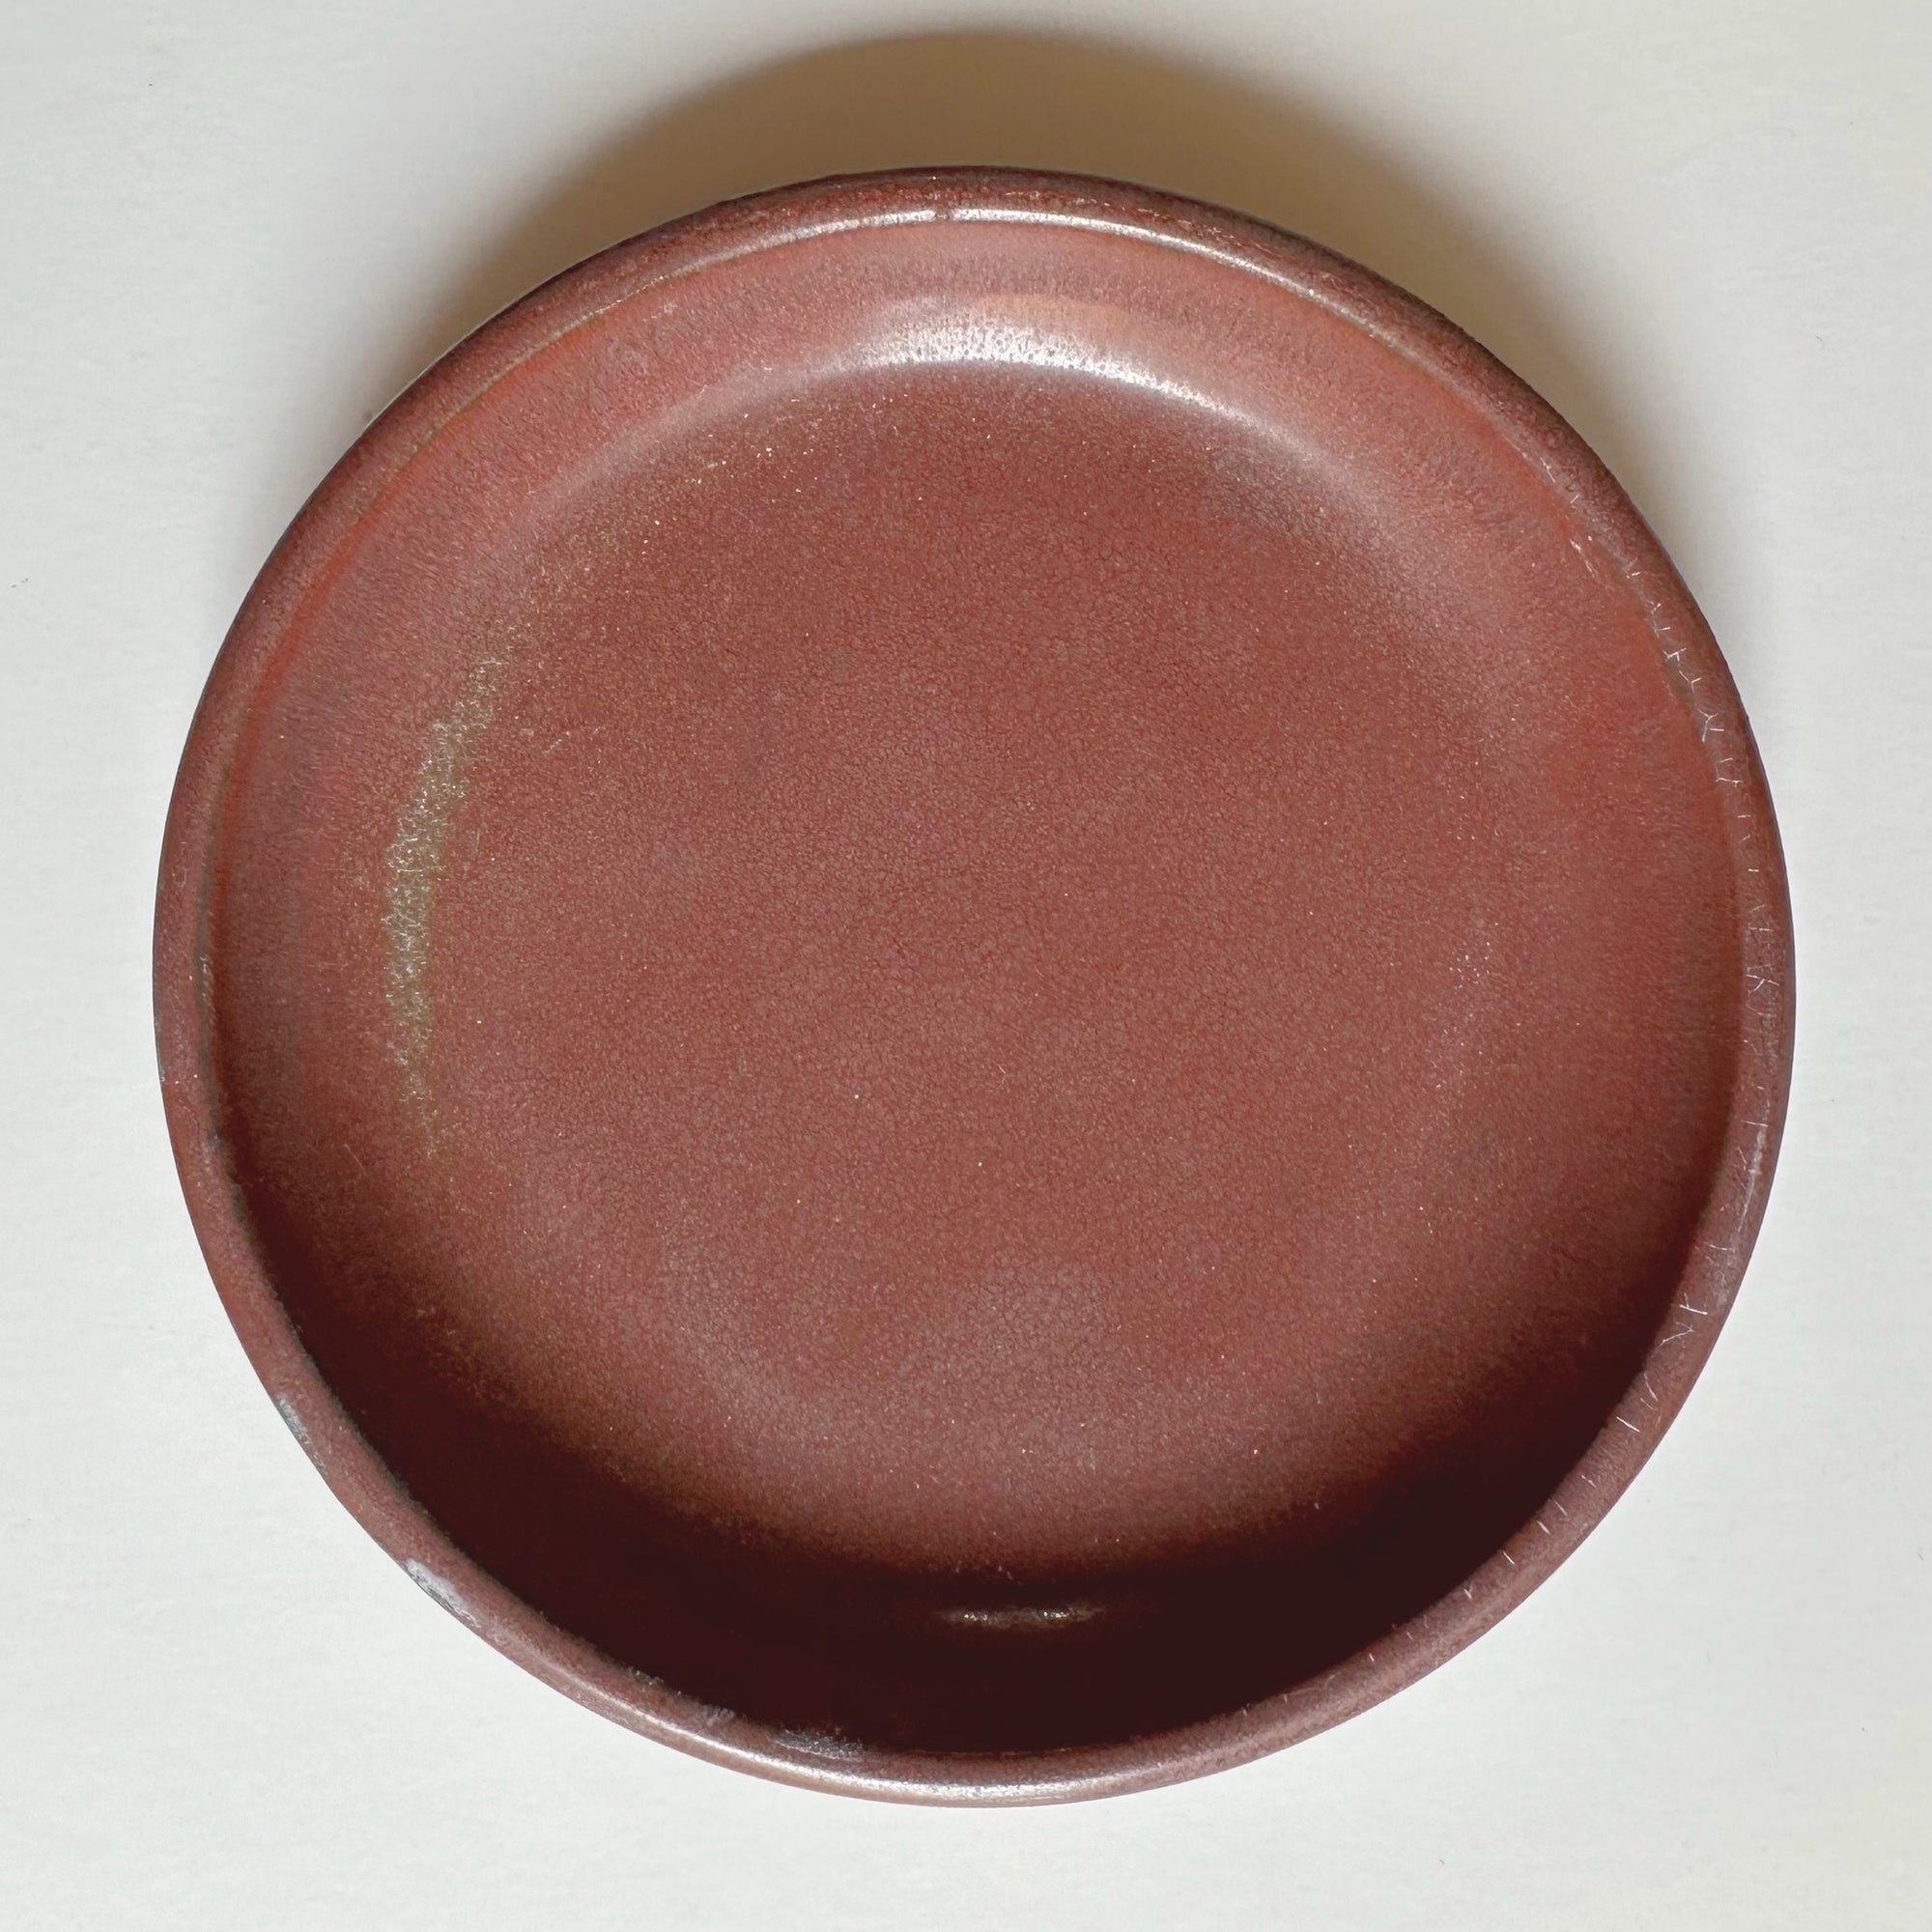 7" Plate, Custom